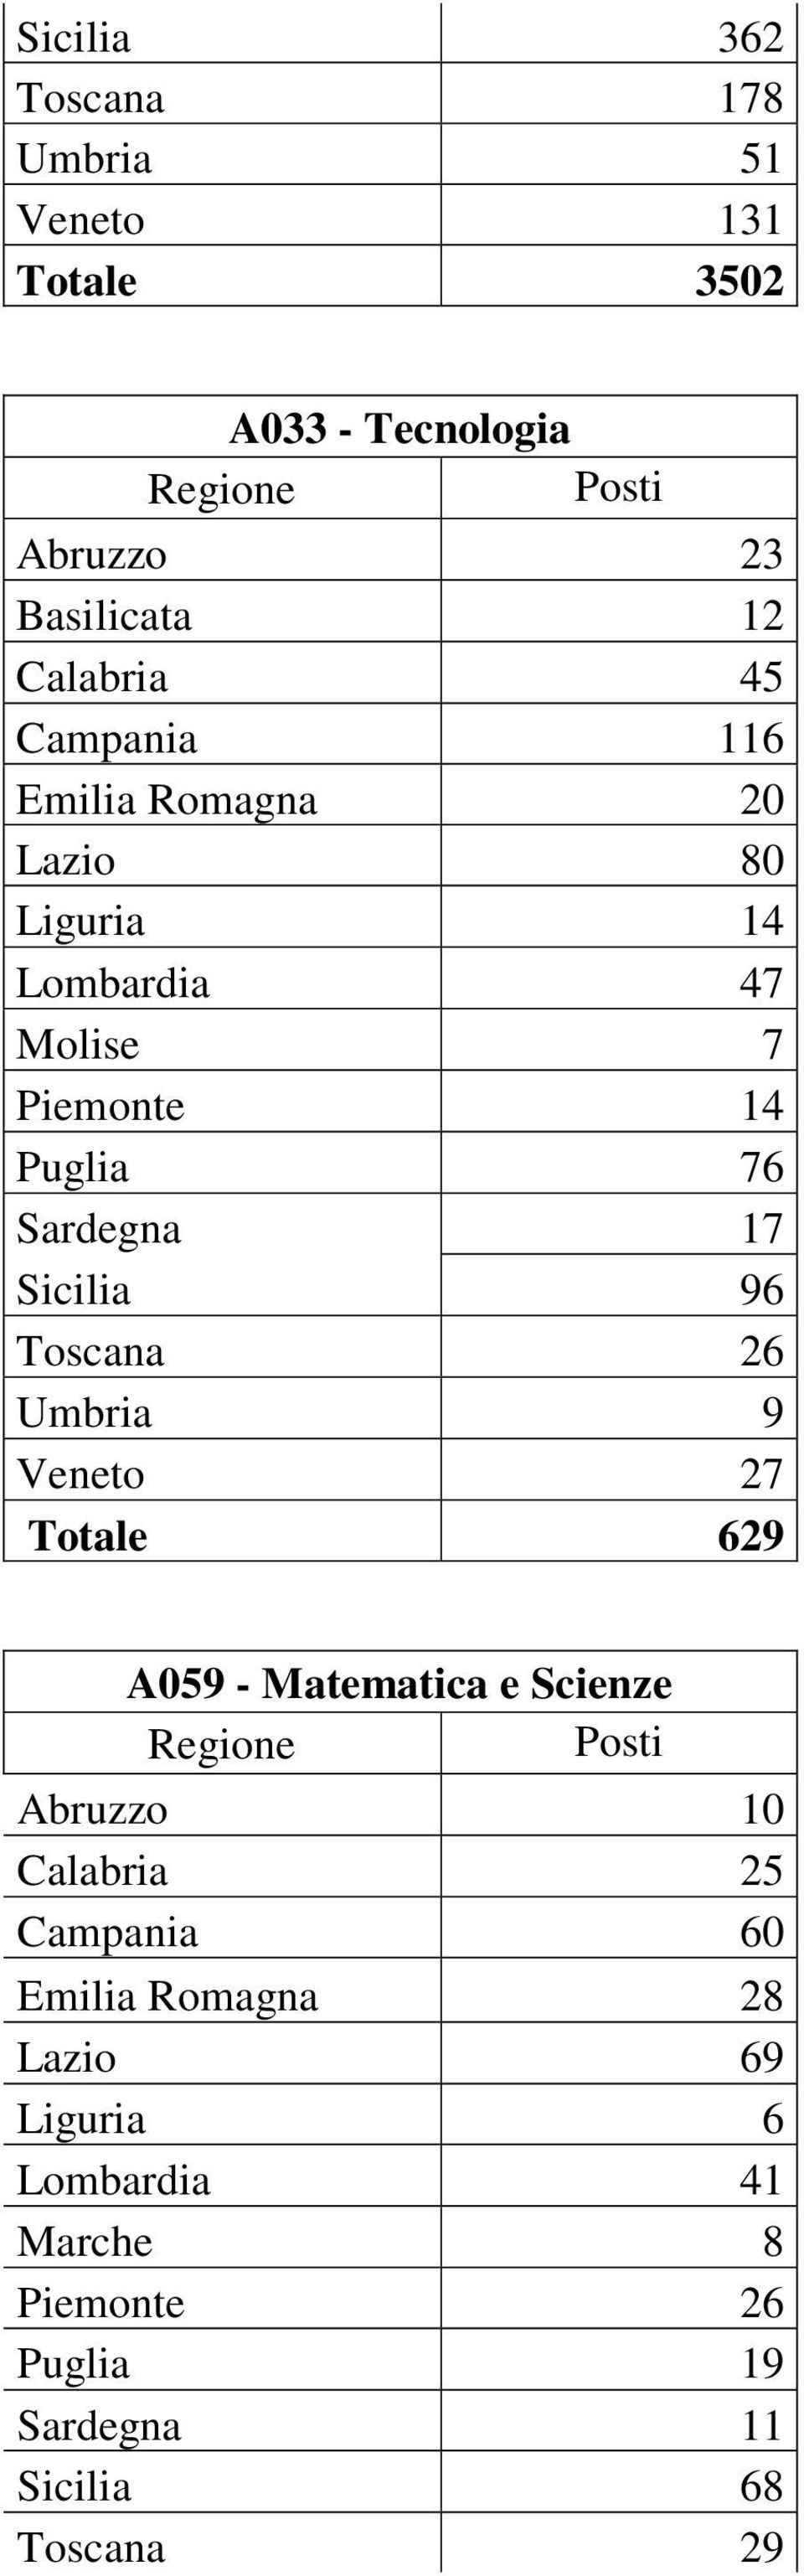 Sicilia 96 Toscana 26 Umbria 9 Veneto 27 Totale 629 A059 - Matematica e Scienze Abruzzo 10 Calabria 25 Campania